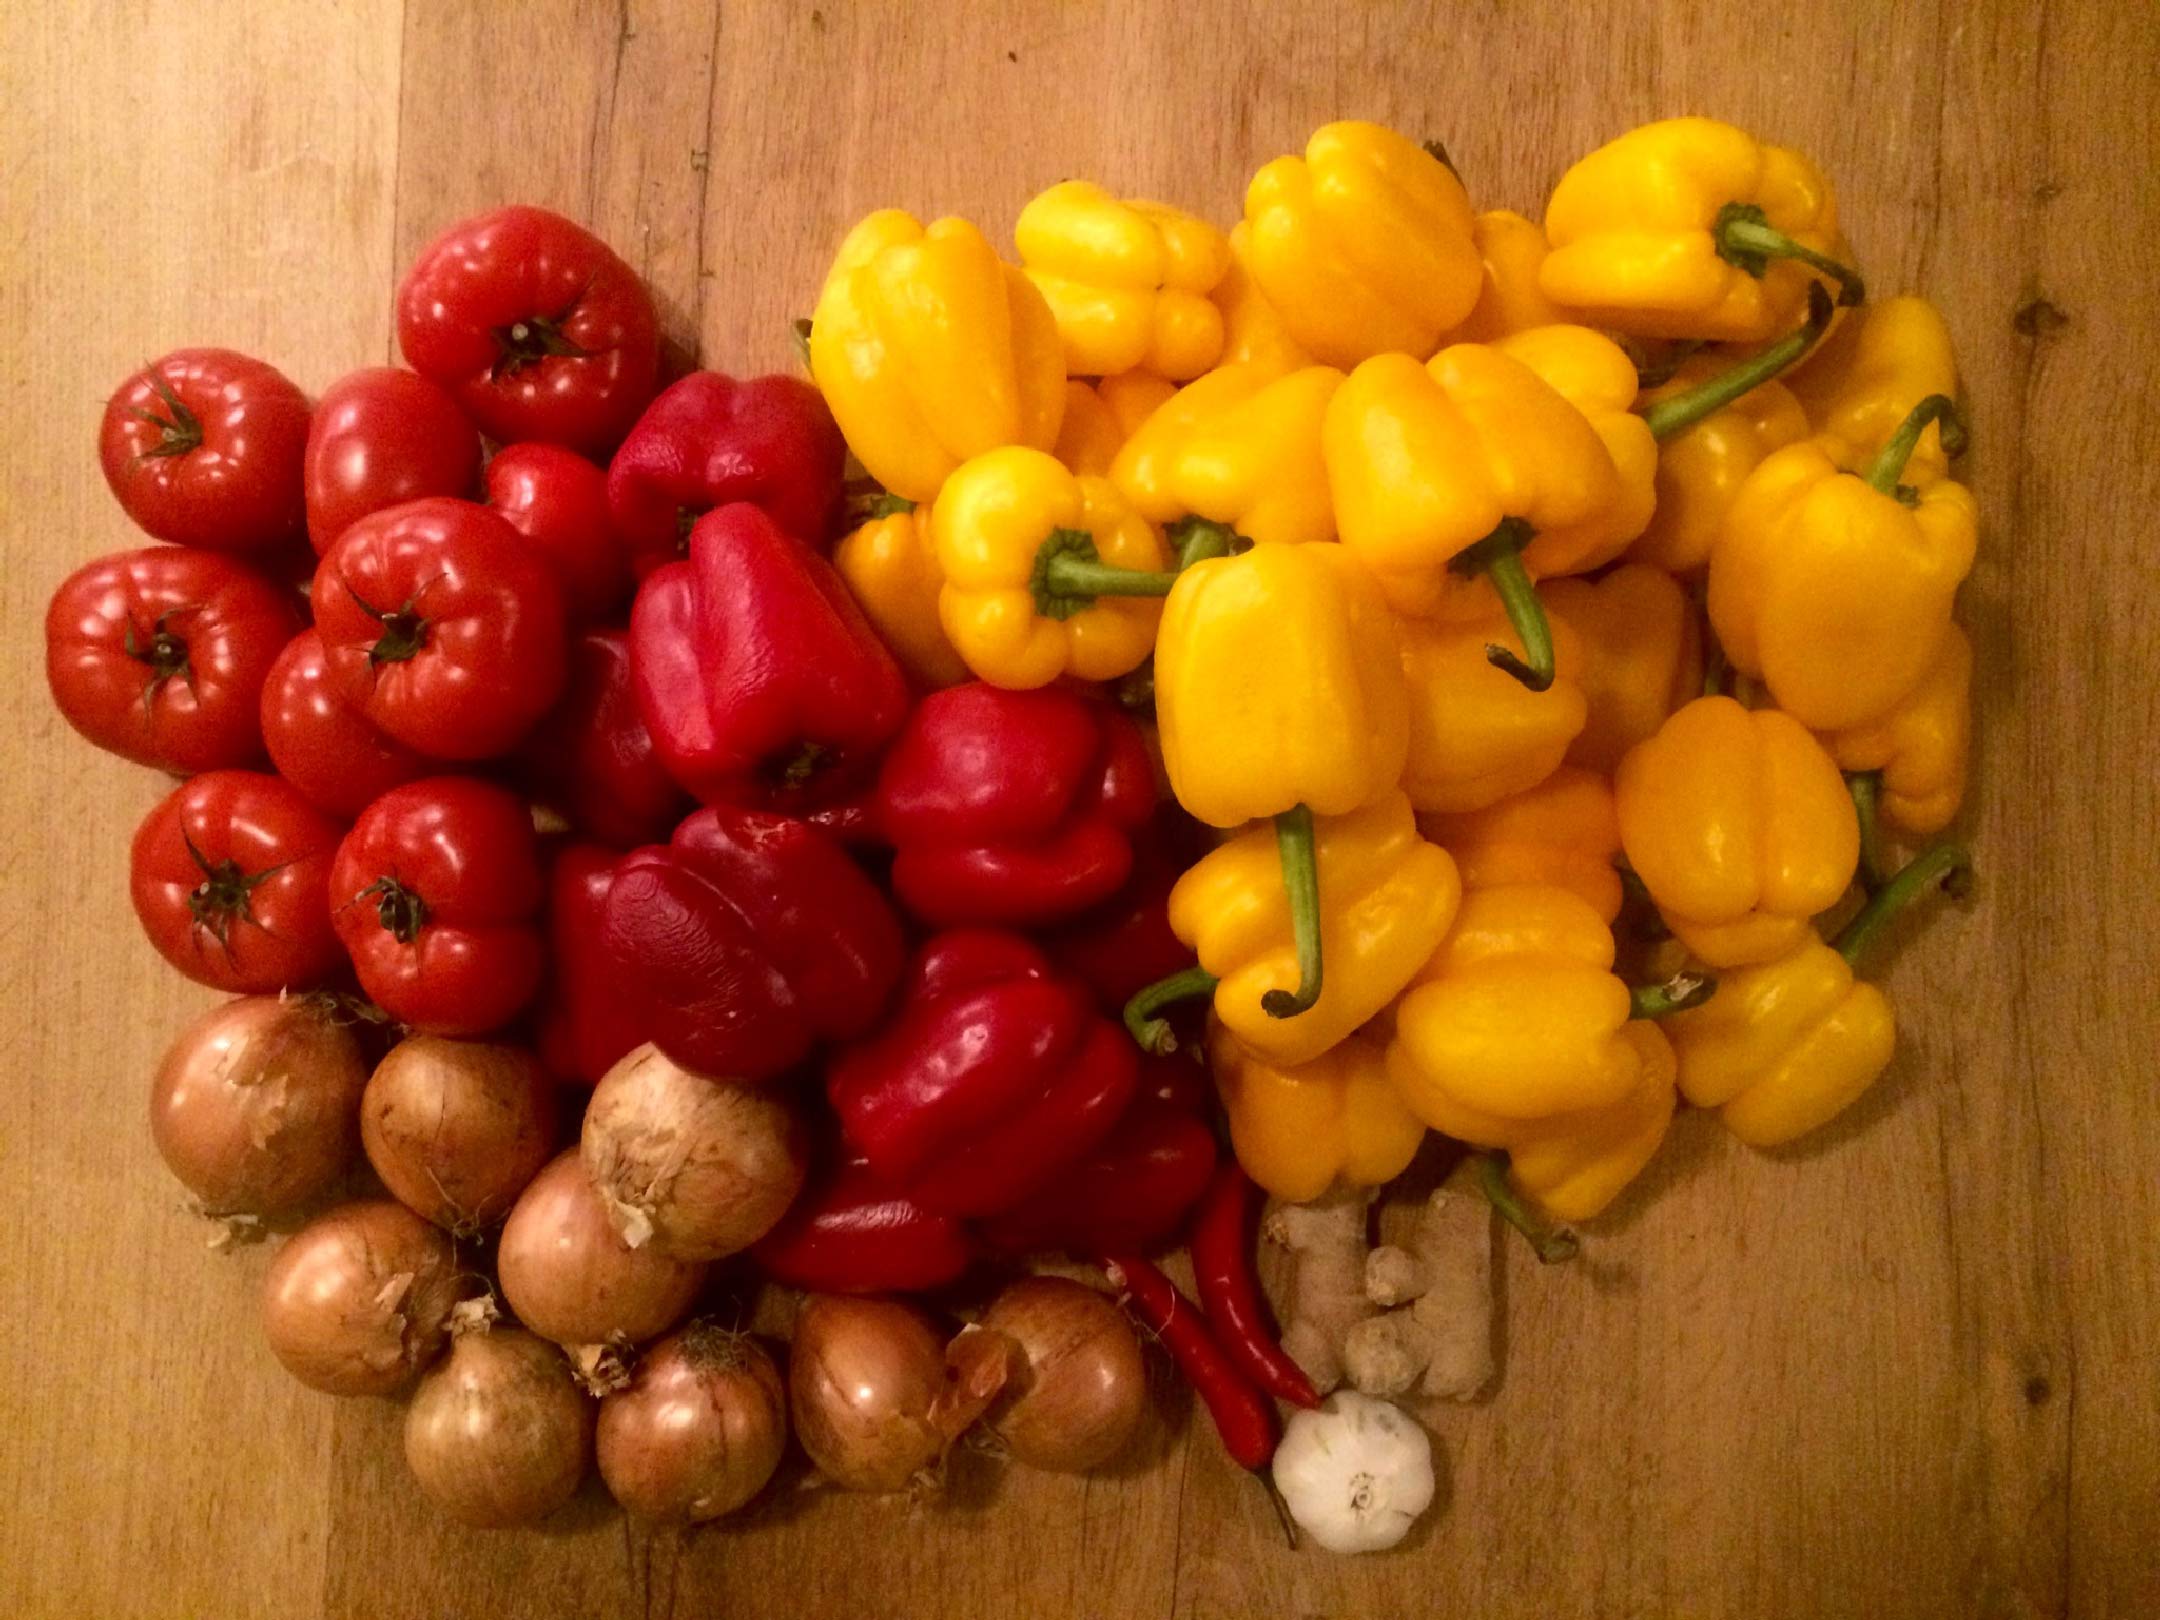 Rode en gele paprika's, tomaten, ui, knoflook, gember en rode pepers